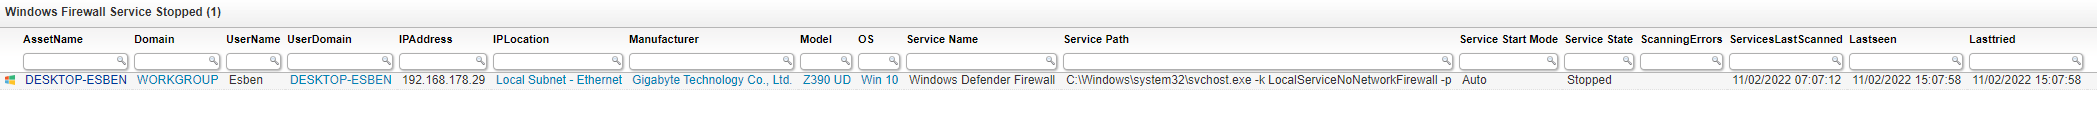 Windows firewall Service report